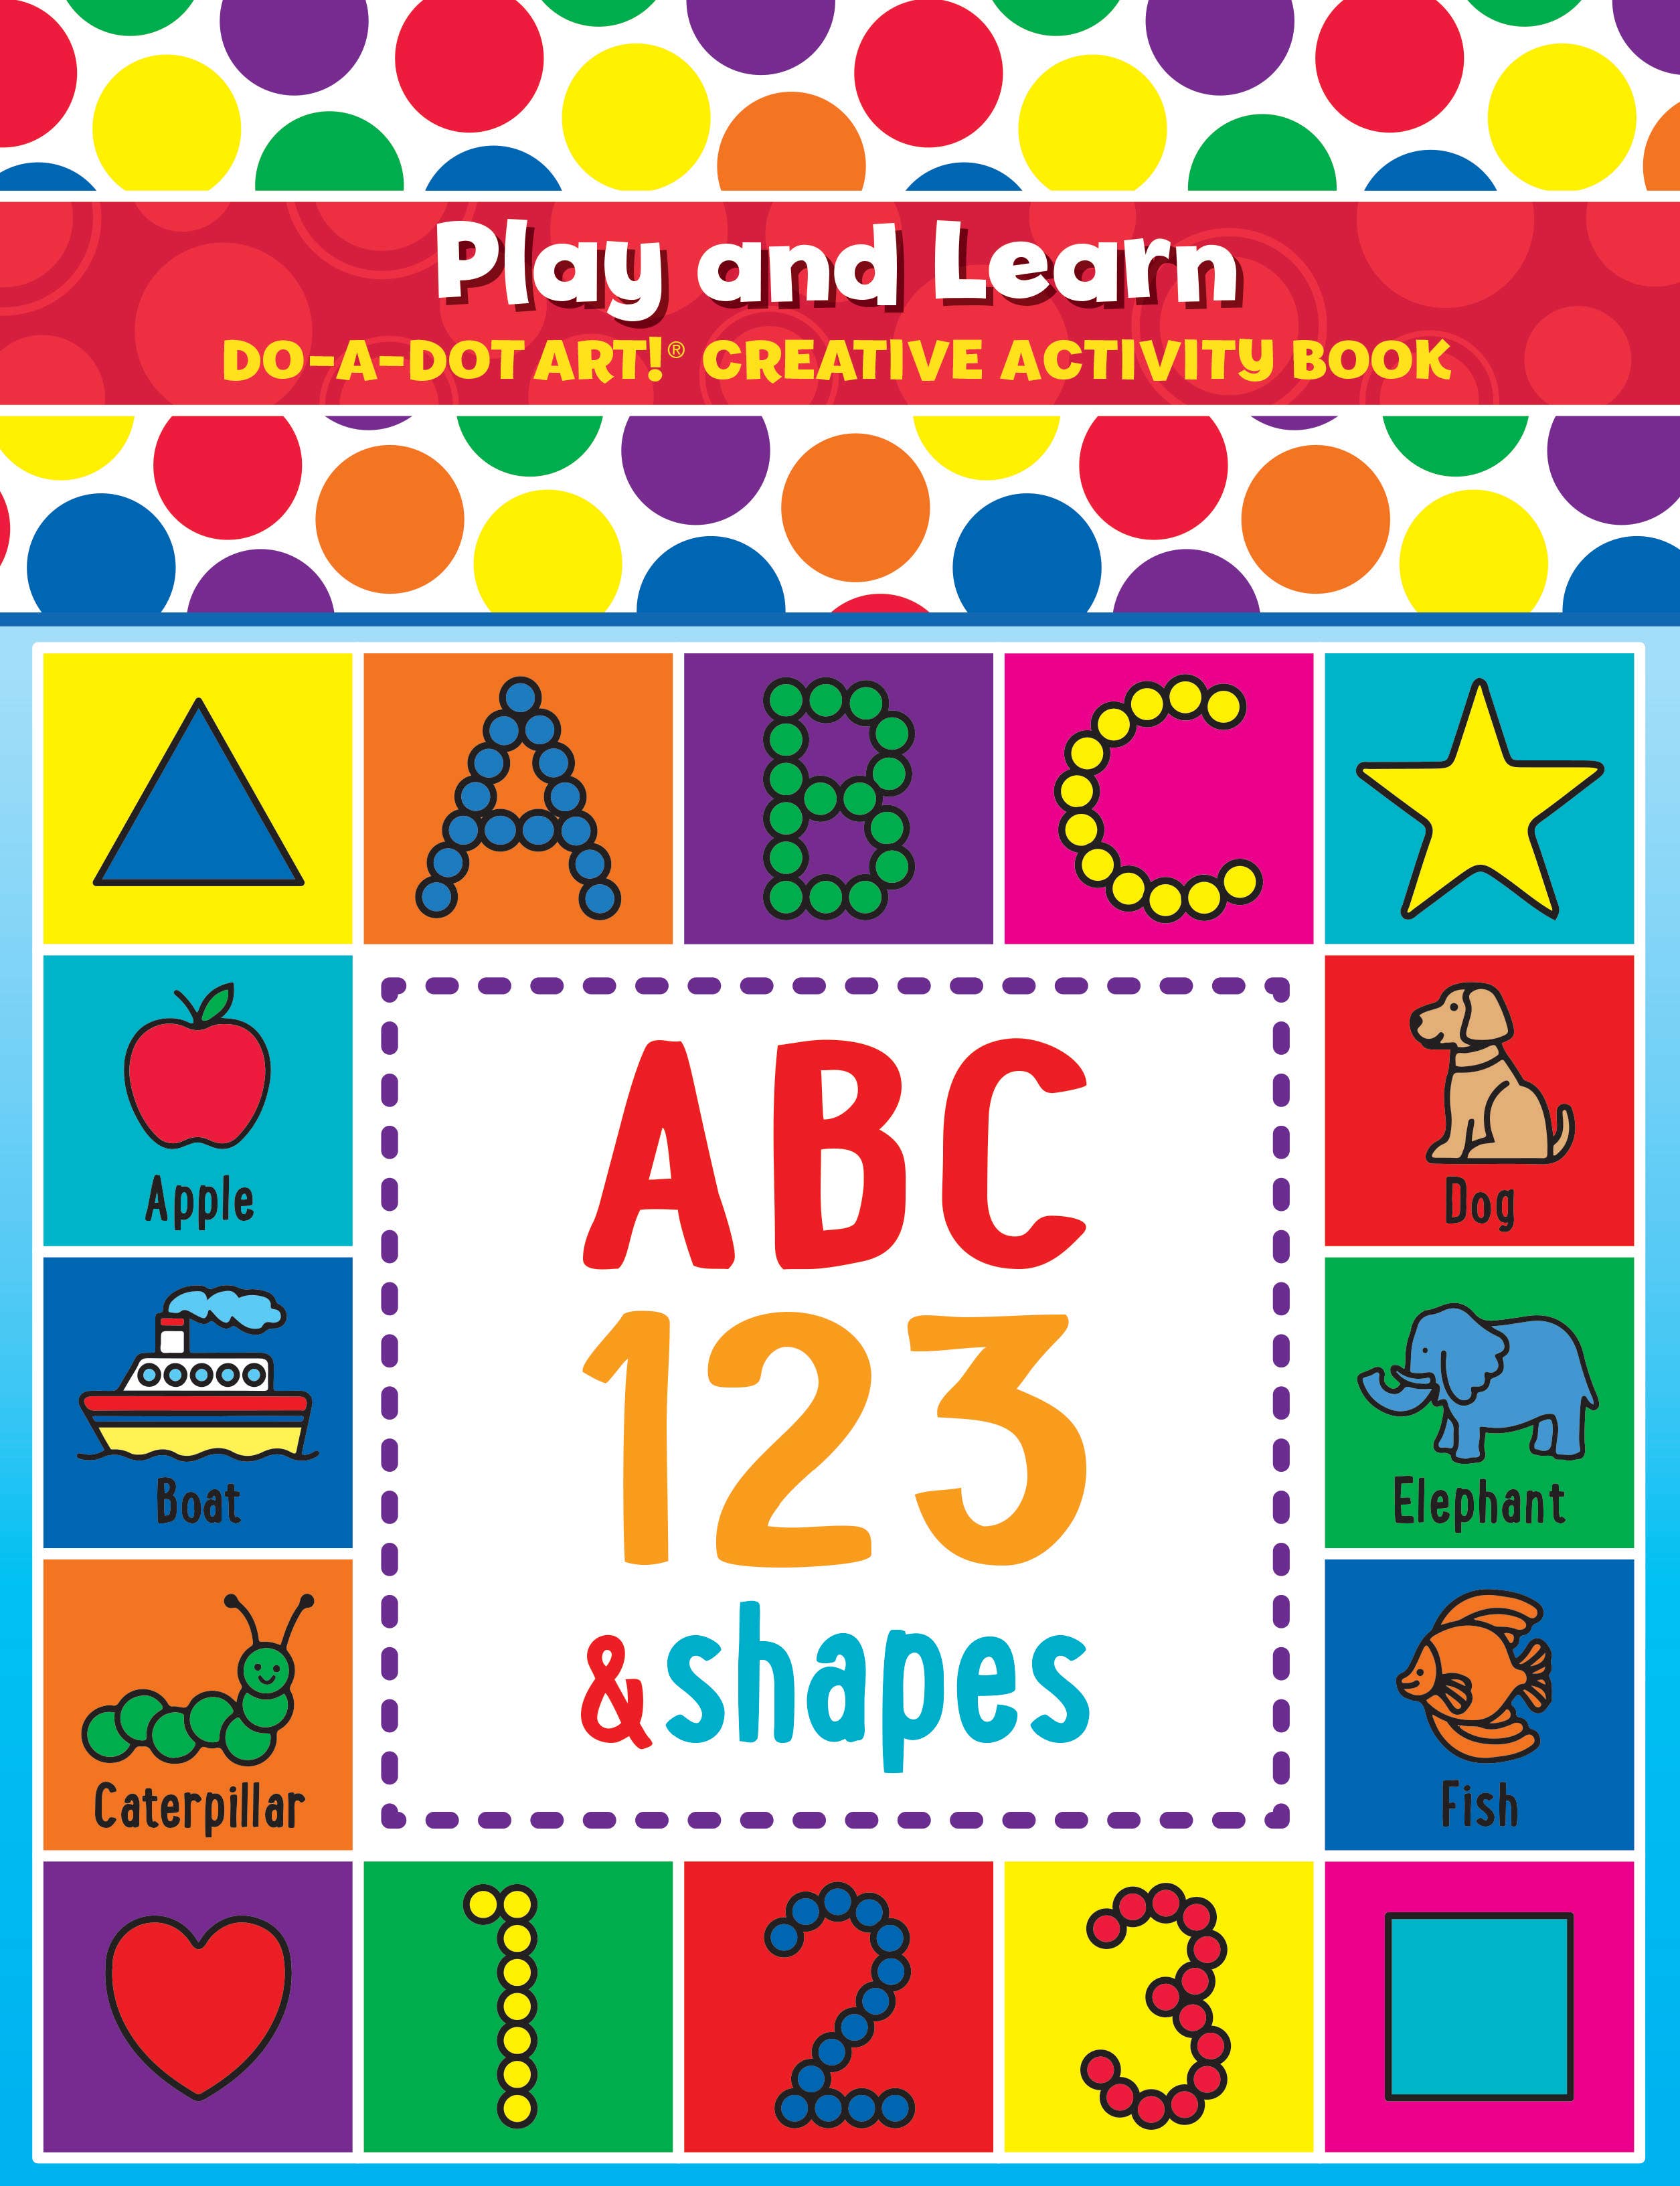 Play & Learn Activity Book